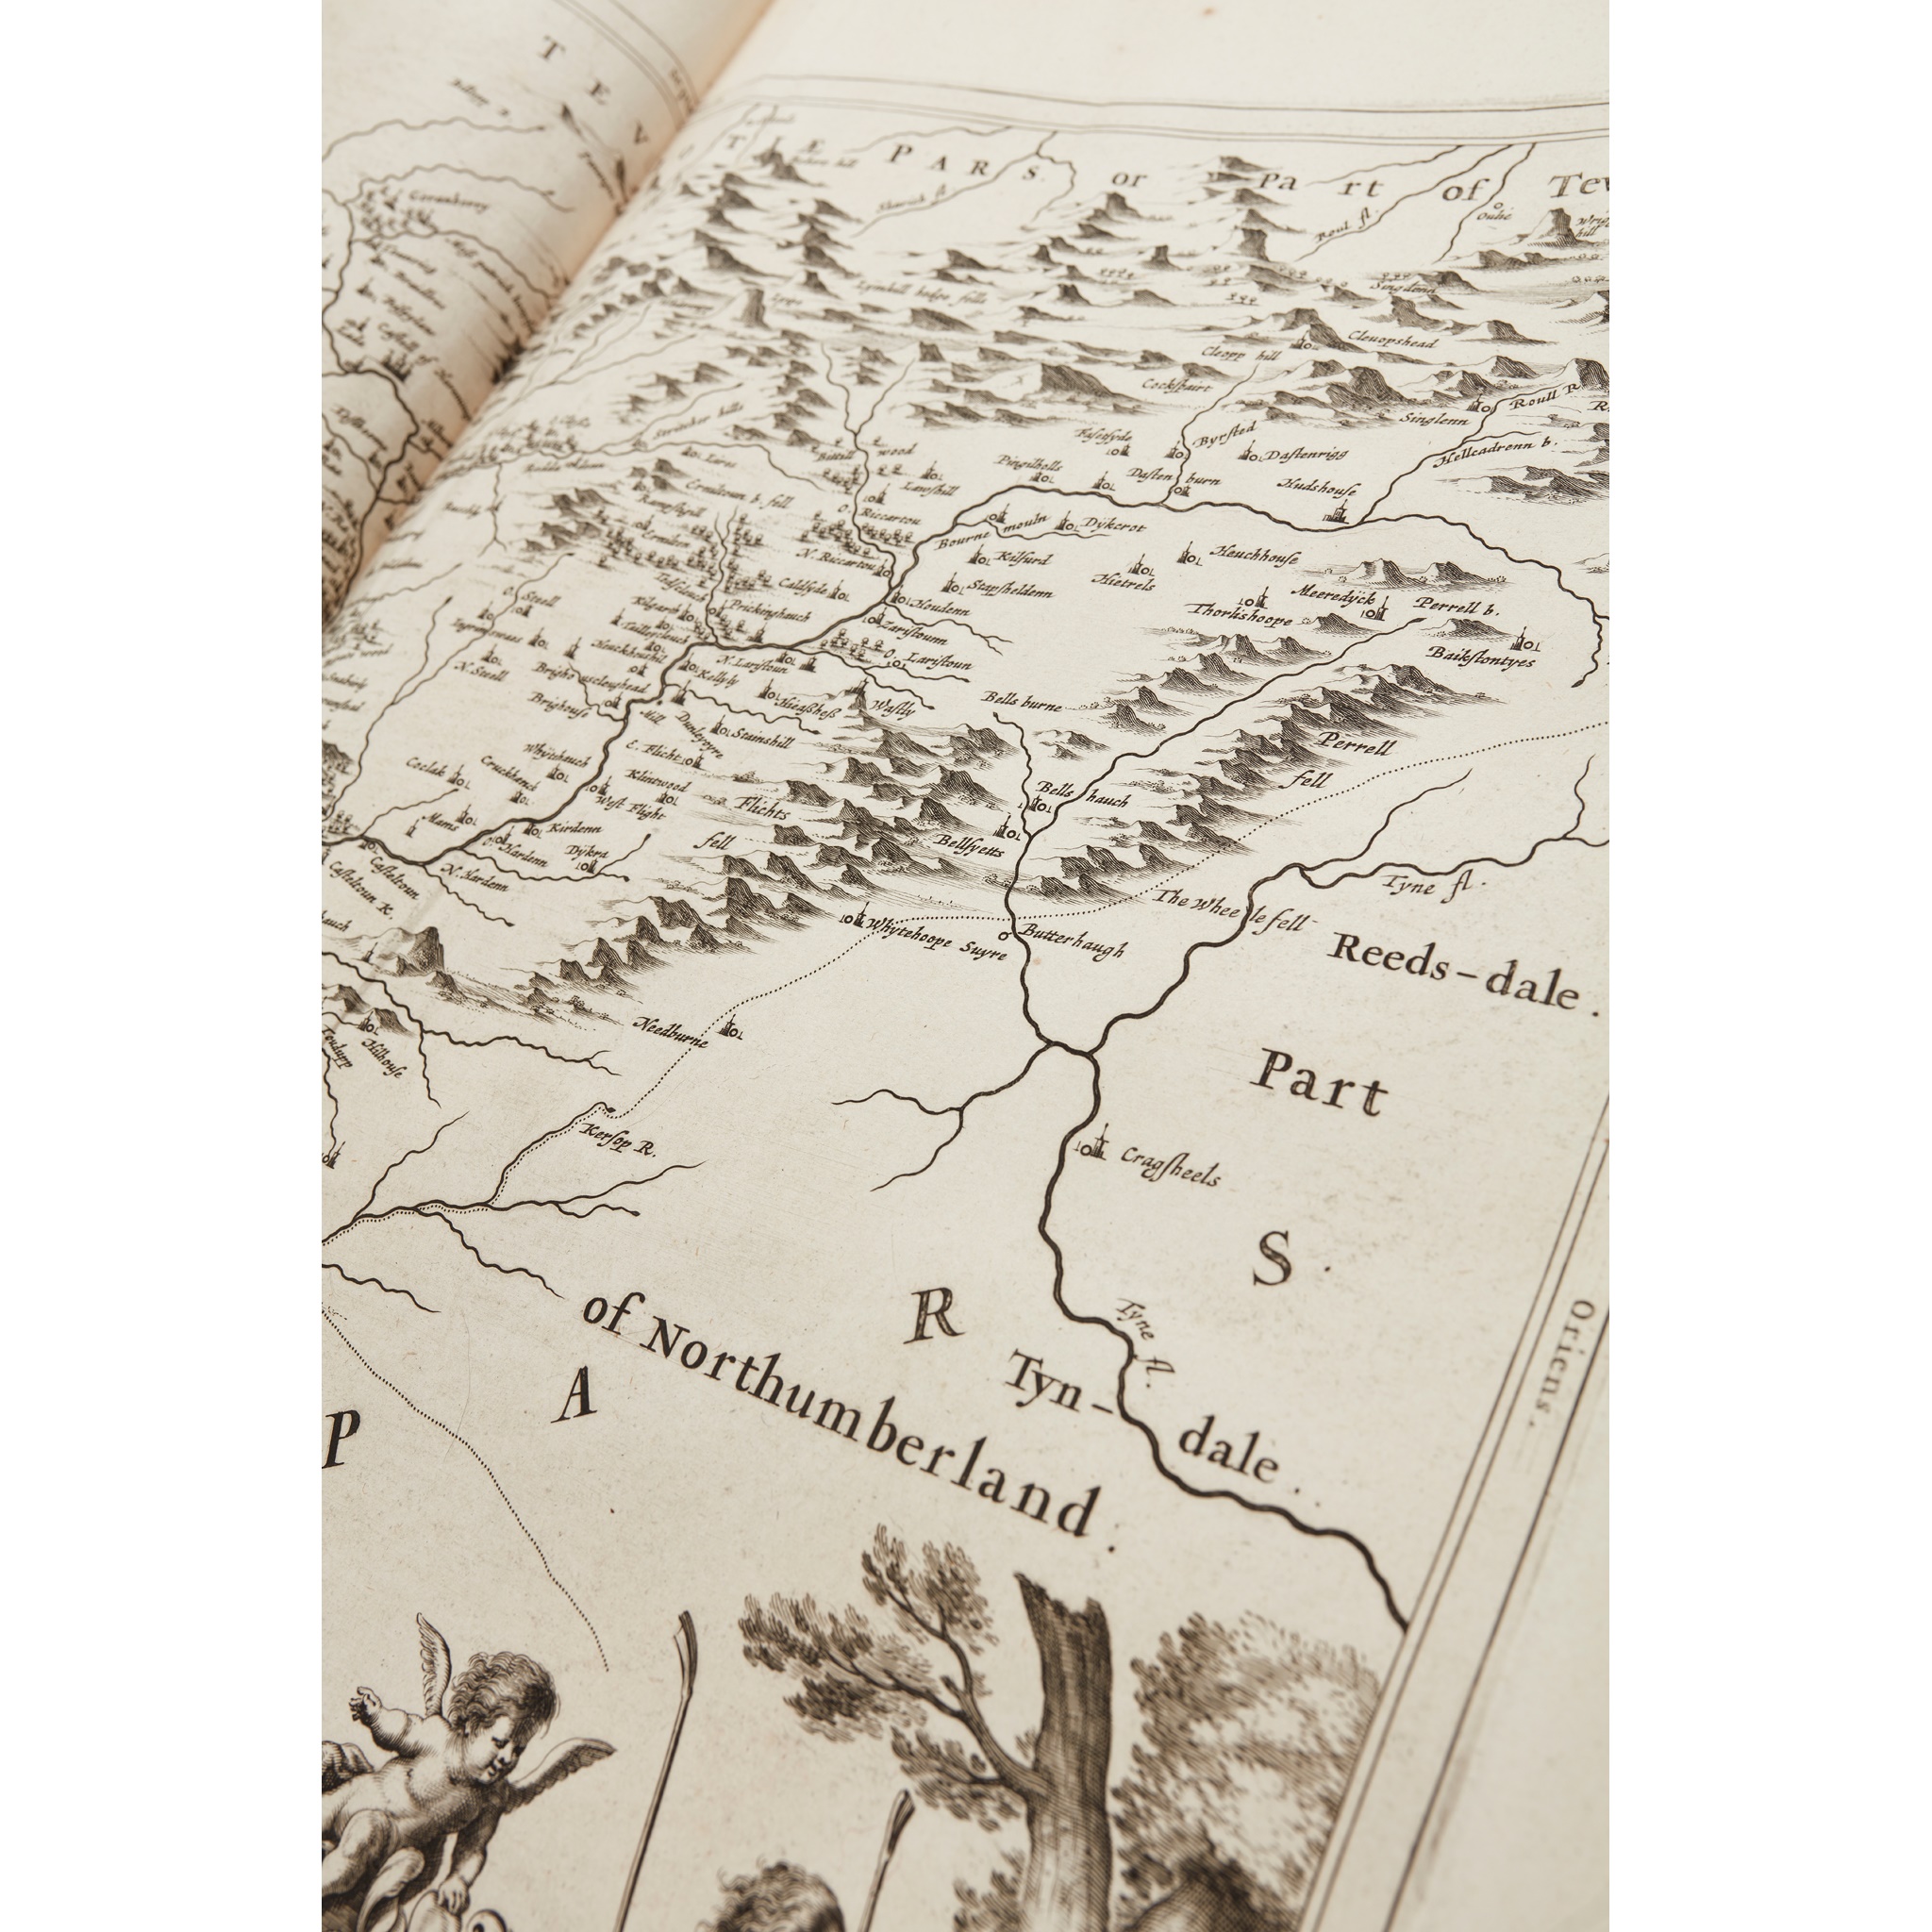 Blaeu, Joan Toonneel des Aerdryck oft Nieuwe Atlas...Vyfde Deel [Theatrum Orbis Terrarum, part V] - Image 23 of 25